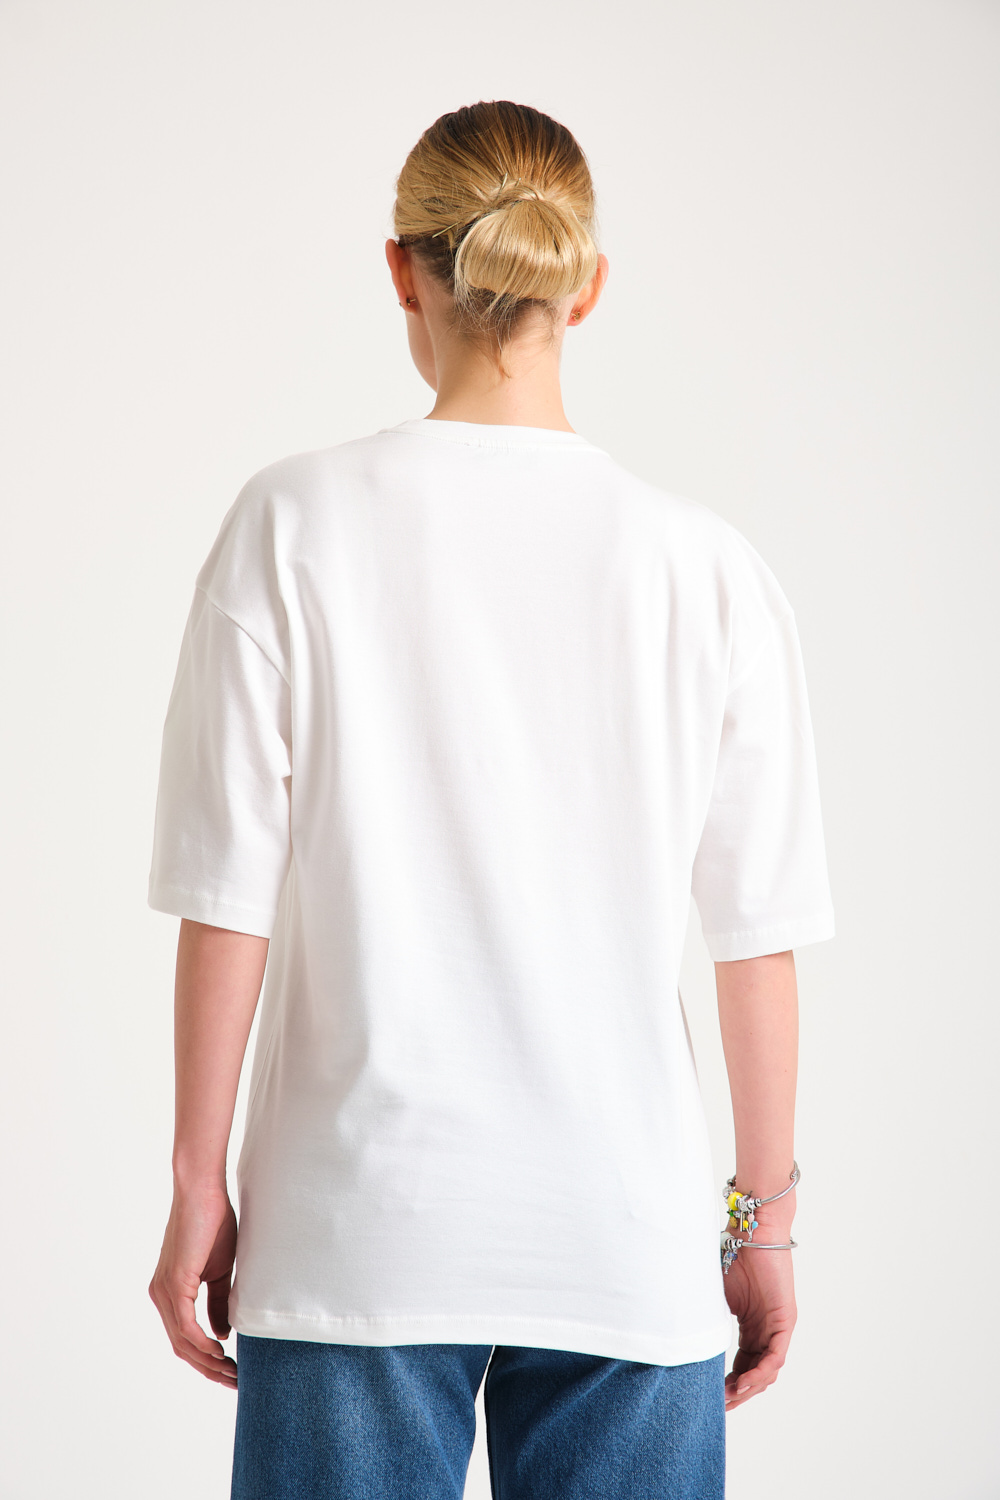 Crew Neck Crystal Printed White T-Shirt